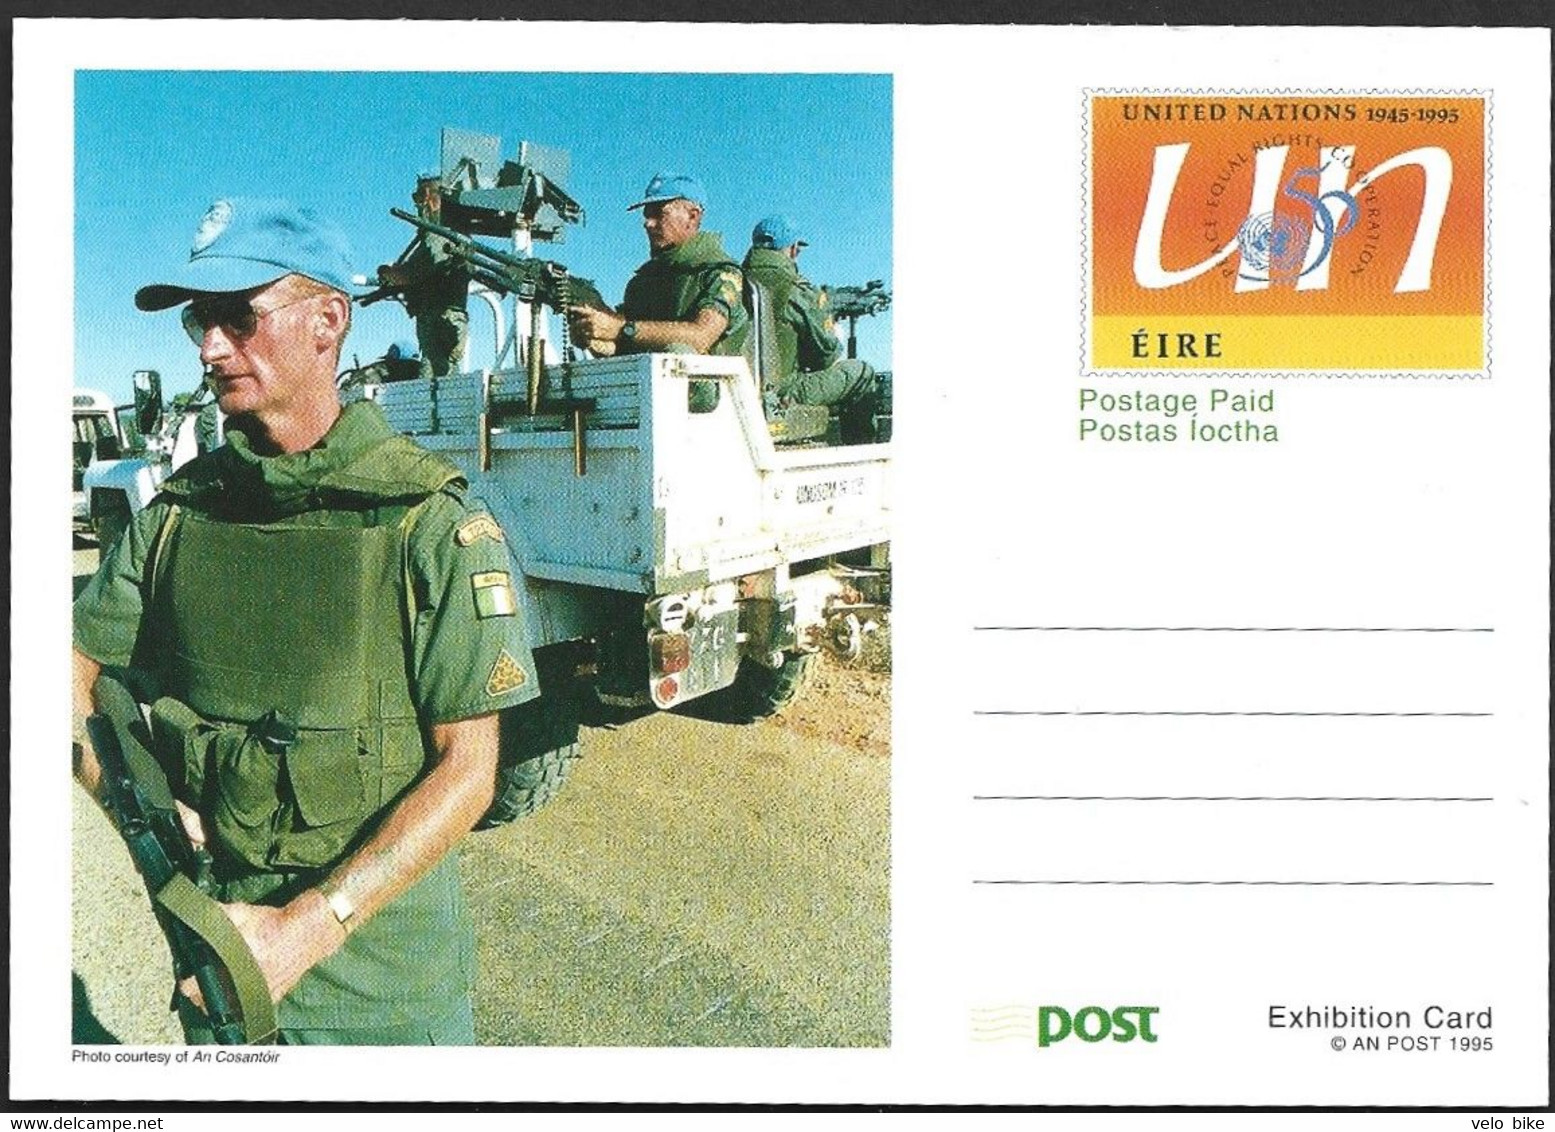 Eire Ireland Postal Stationery Postage Paid Exhibition Card 1995 UN Soldier Uniform Weapon Truck Loggo Globe Peace Equal - Postal Stationery